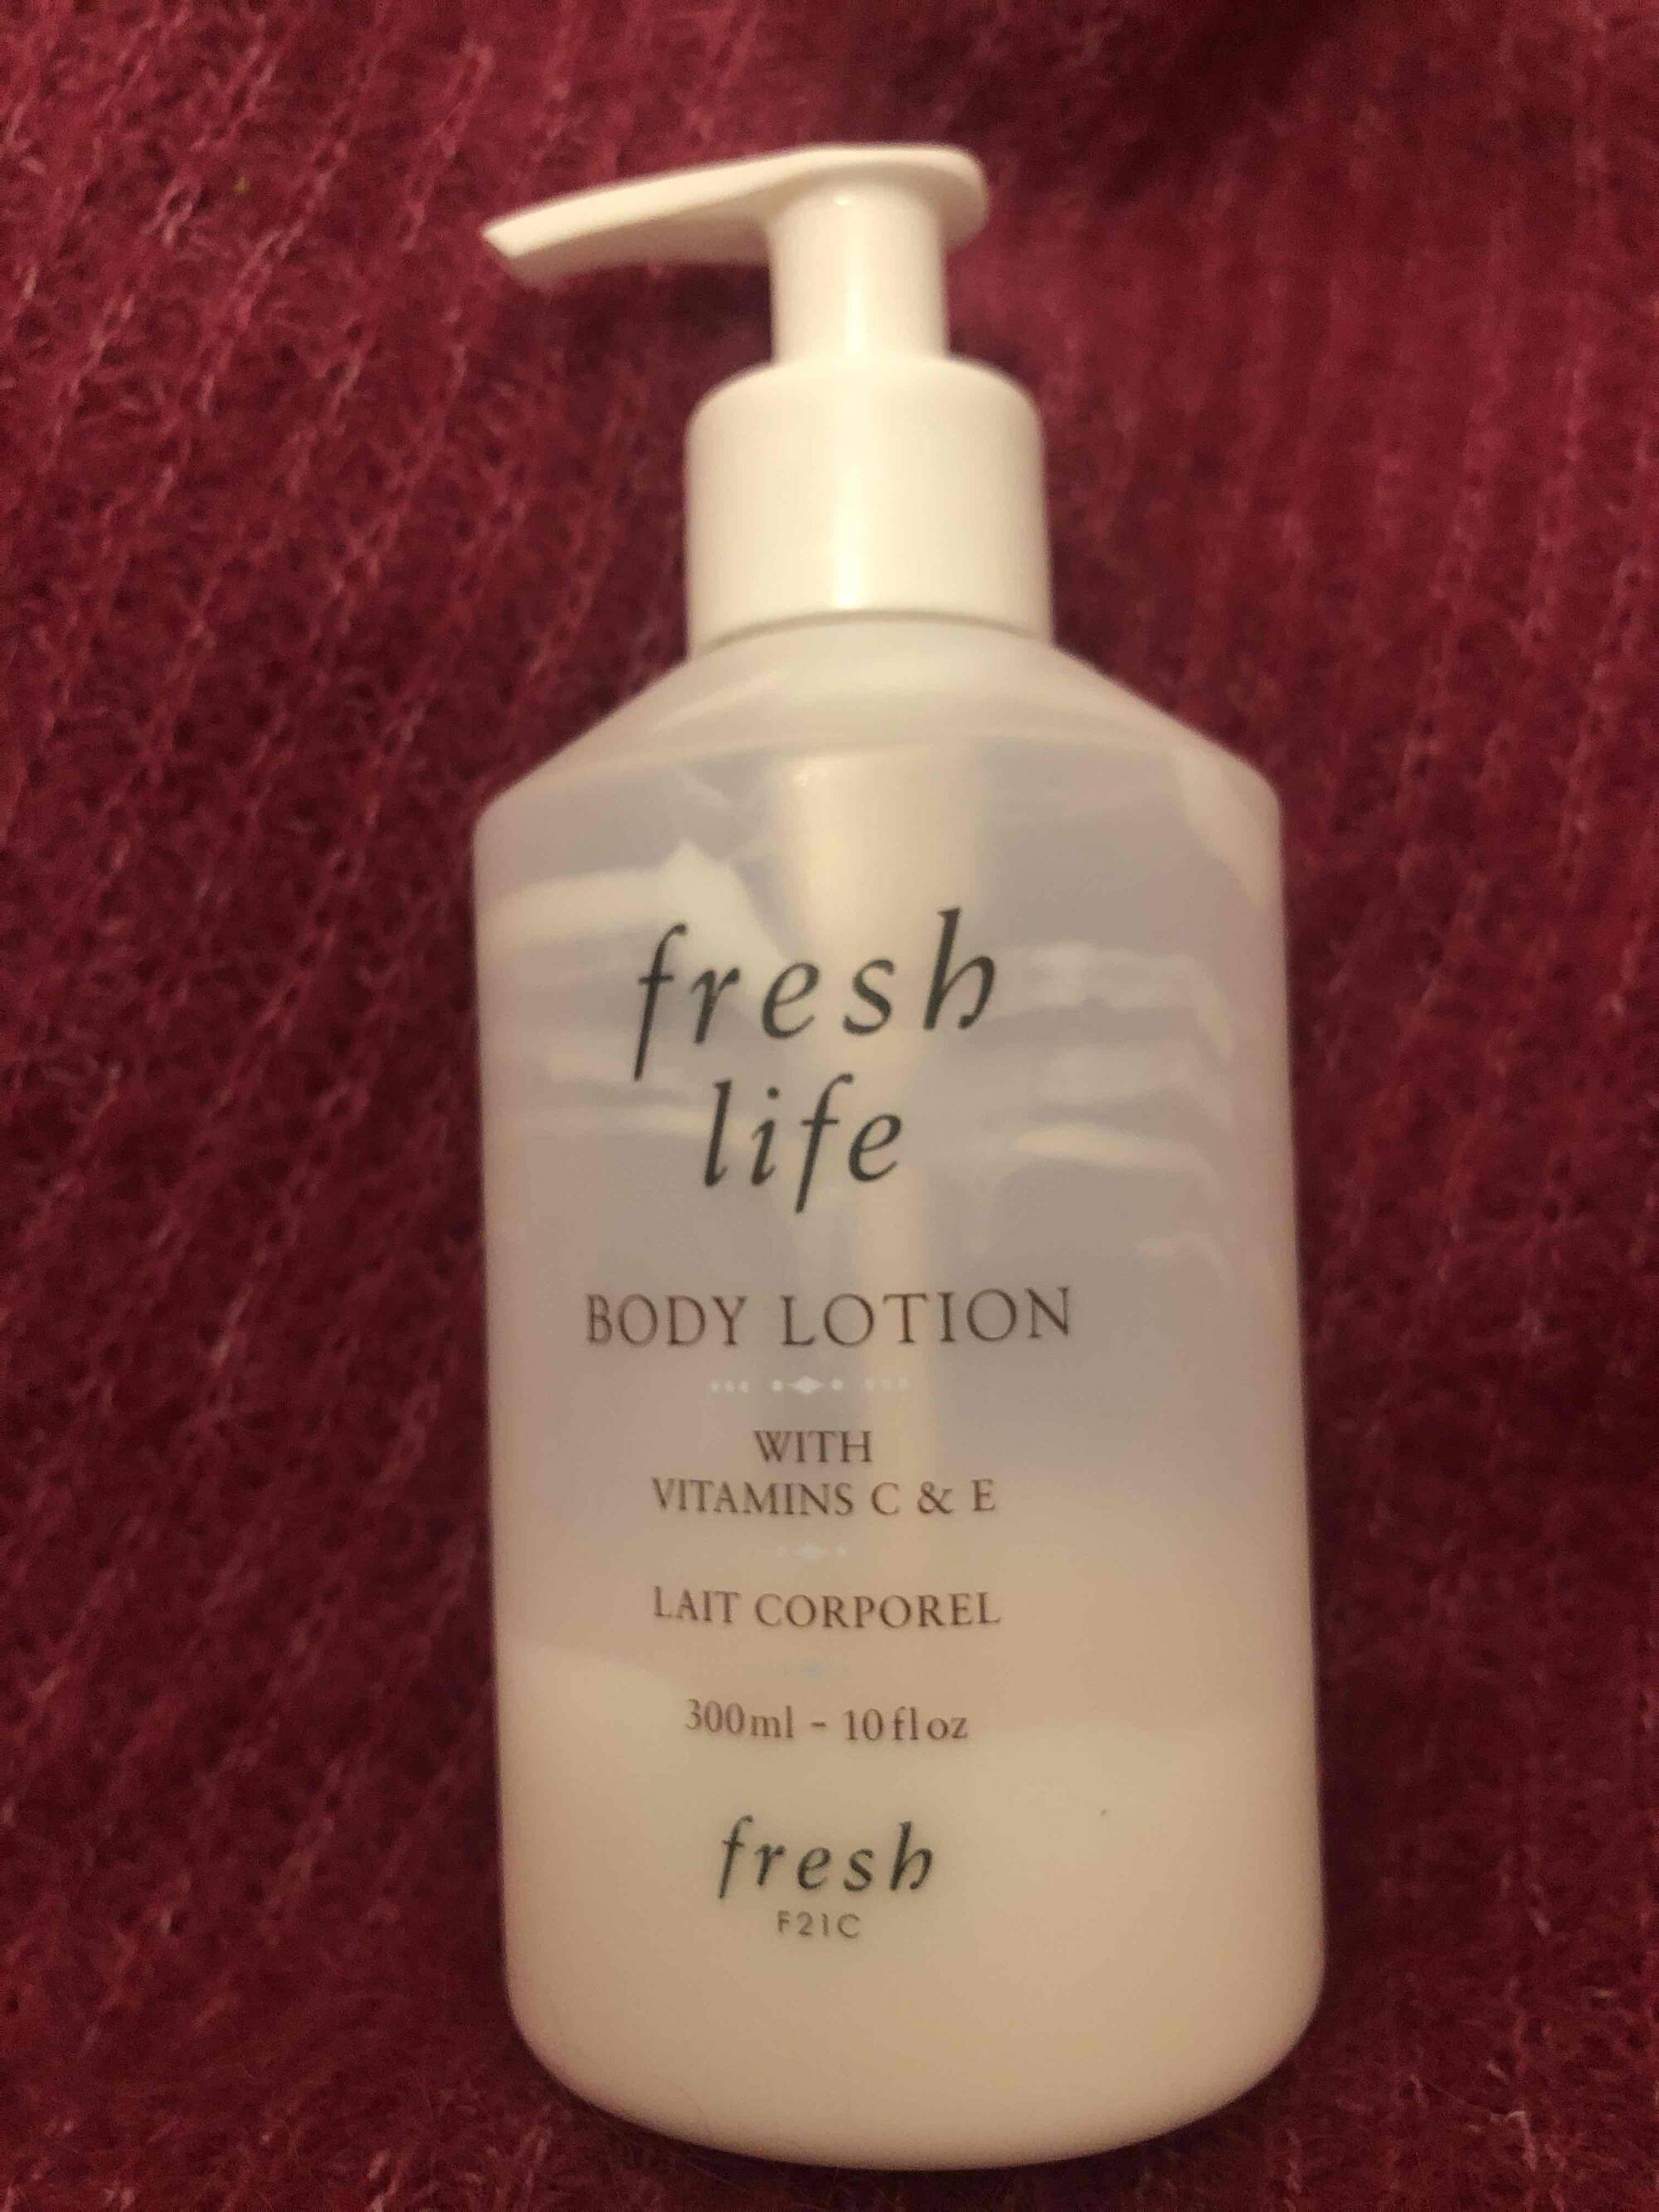 FRESH - Fresh life - Lait corporel 